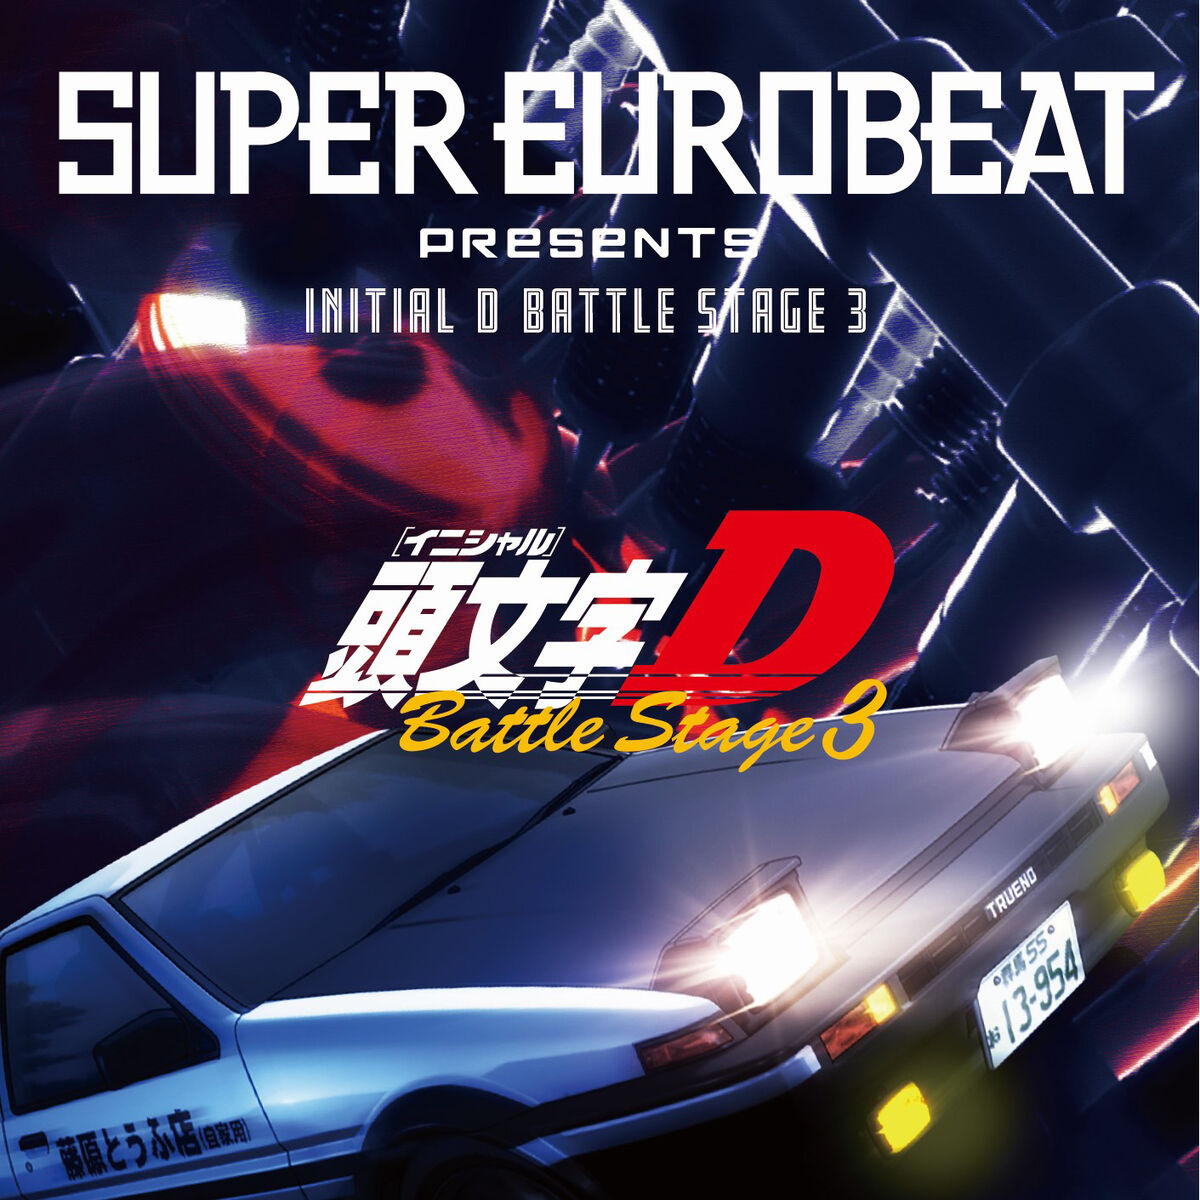 Super Eurobeat Presents Initial D Battle Stage 3 | Eurobeat Wiki